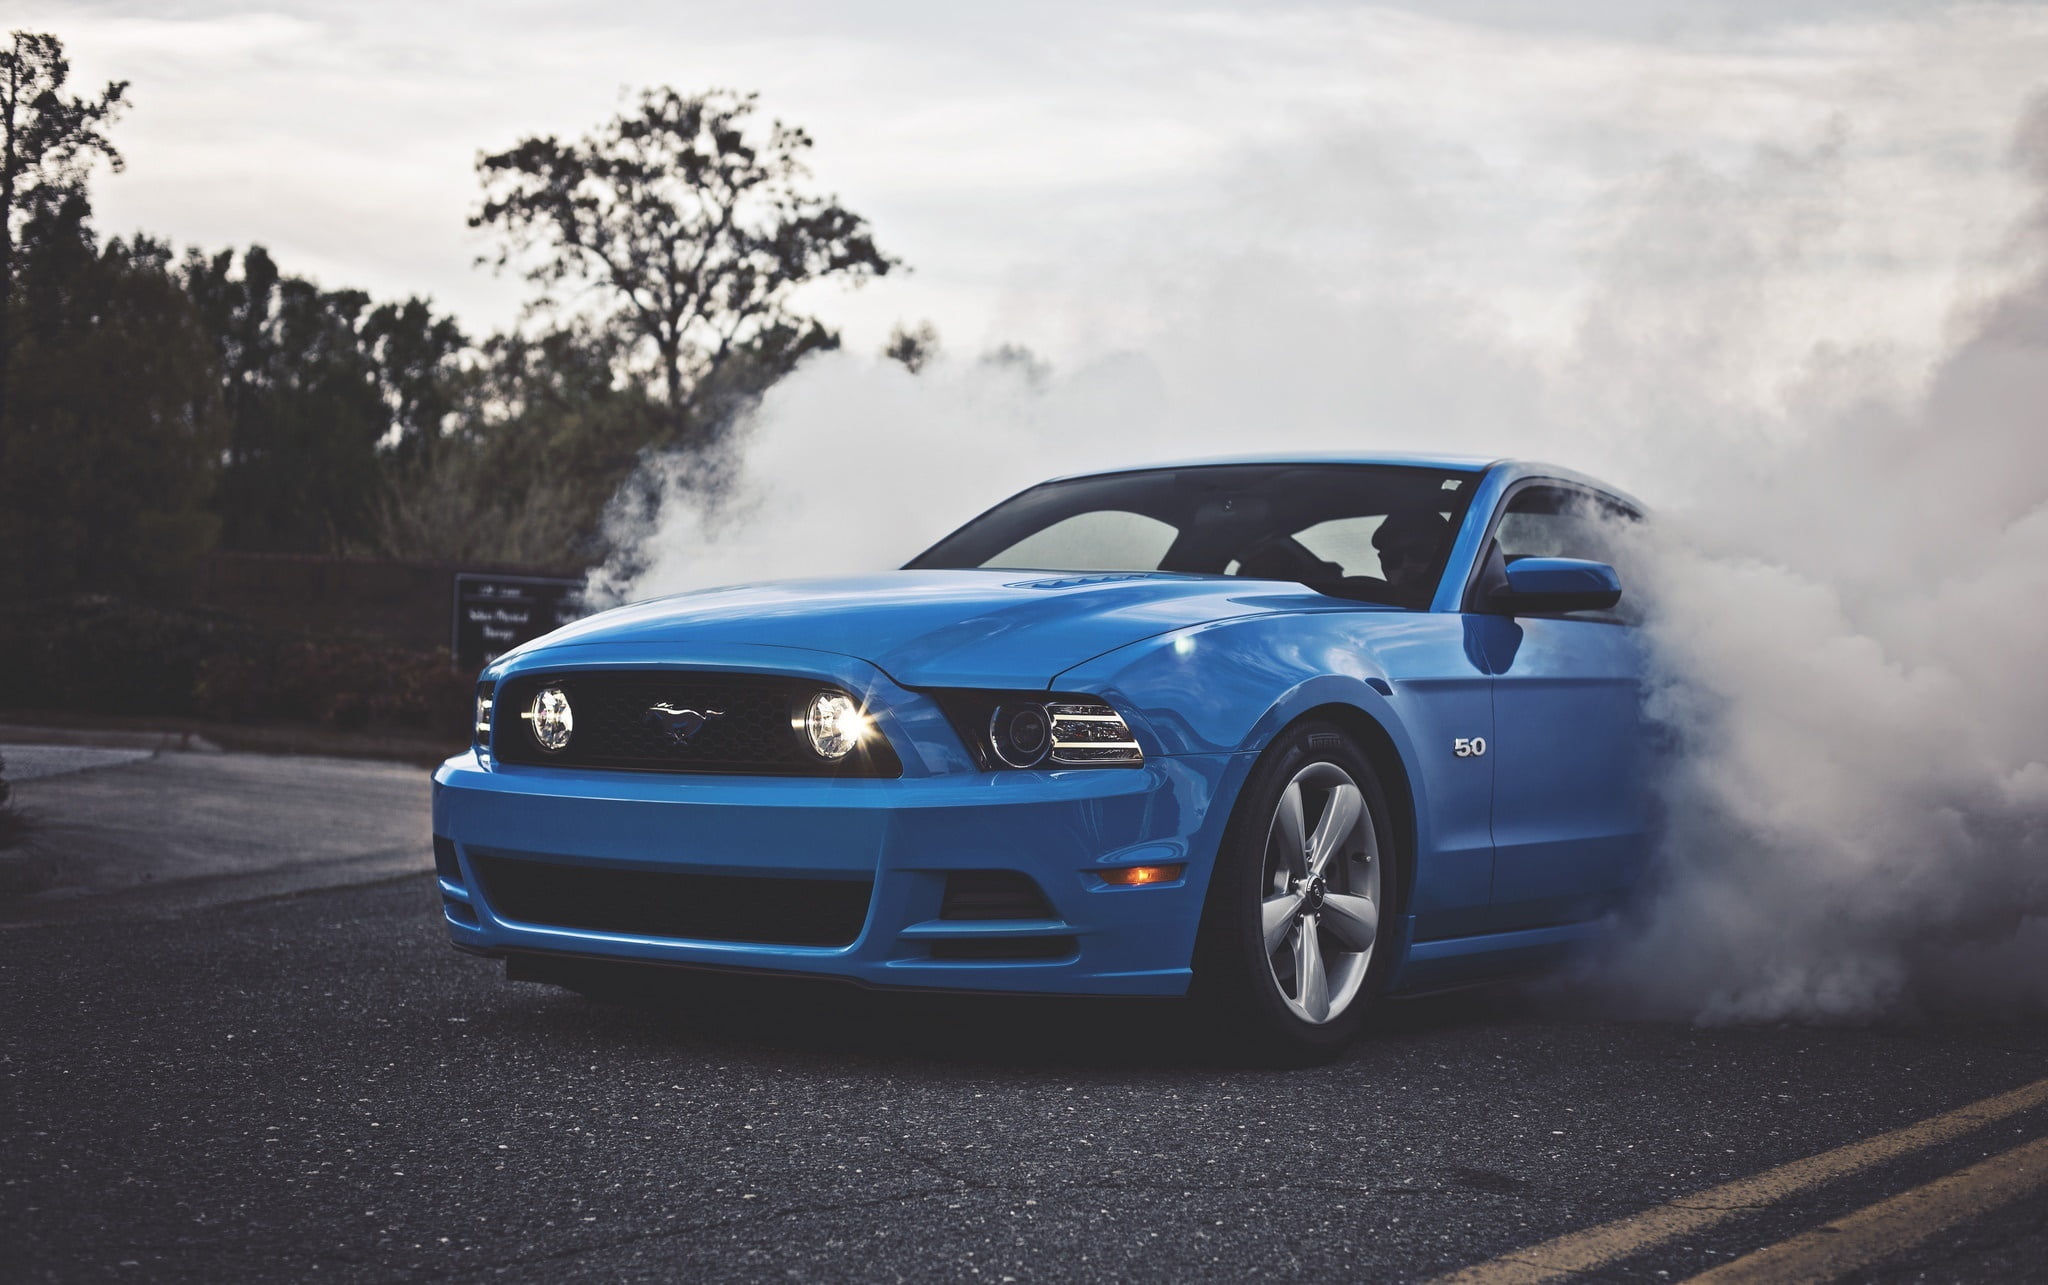 blue Ford Mustang, 5.0, Smoke, Muscle Car, transportation, mode of transportation